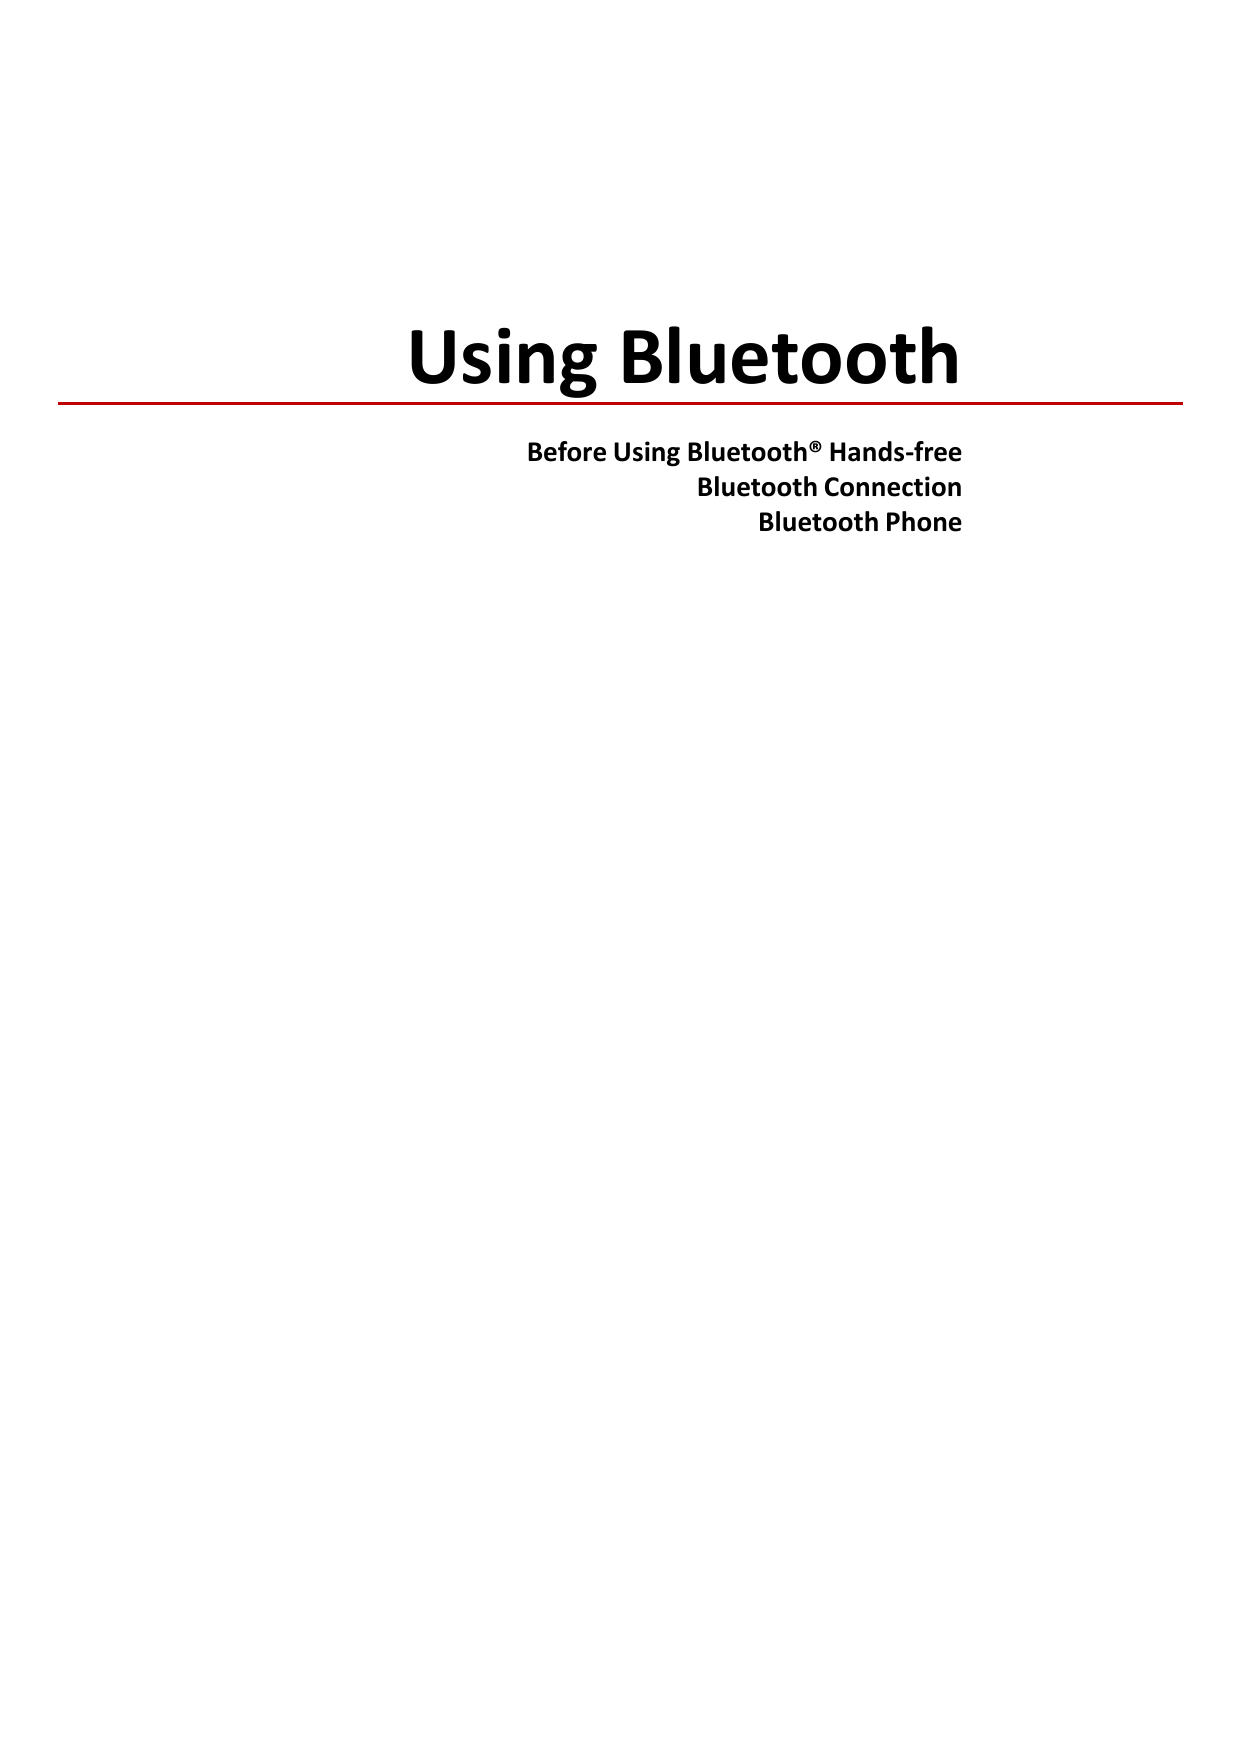 Before Using Bluetooth® Hands-freeBluetooth ConnectionBluetooth PhoneUsing Bluetooth